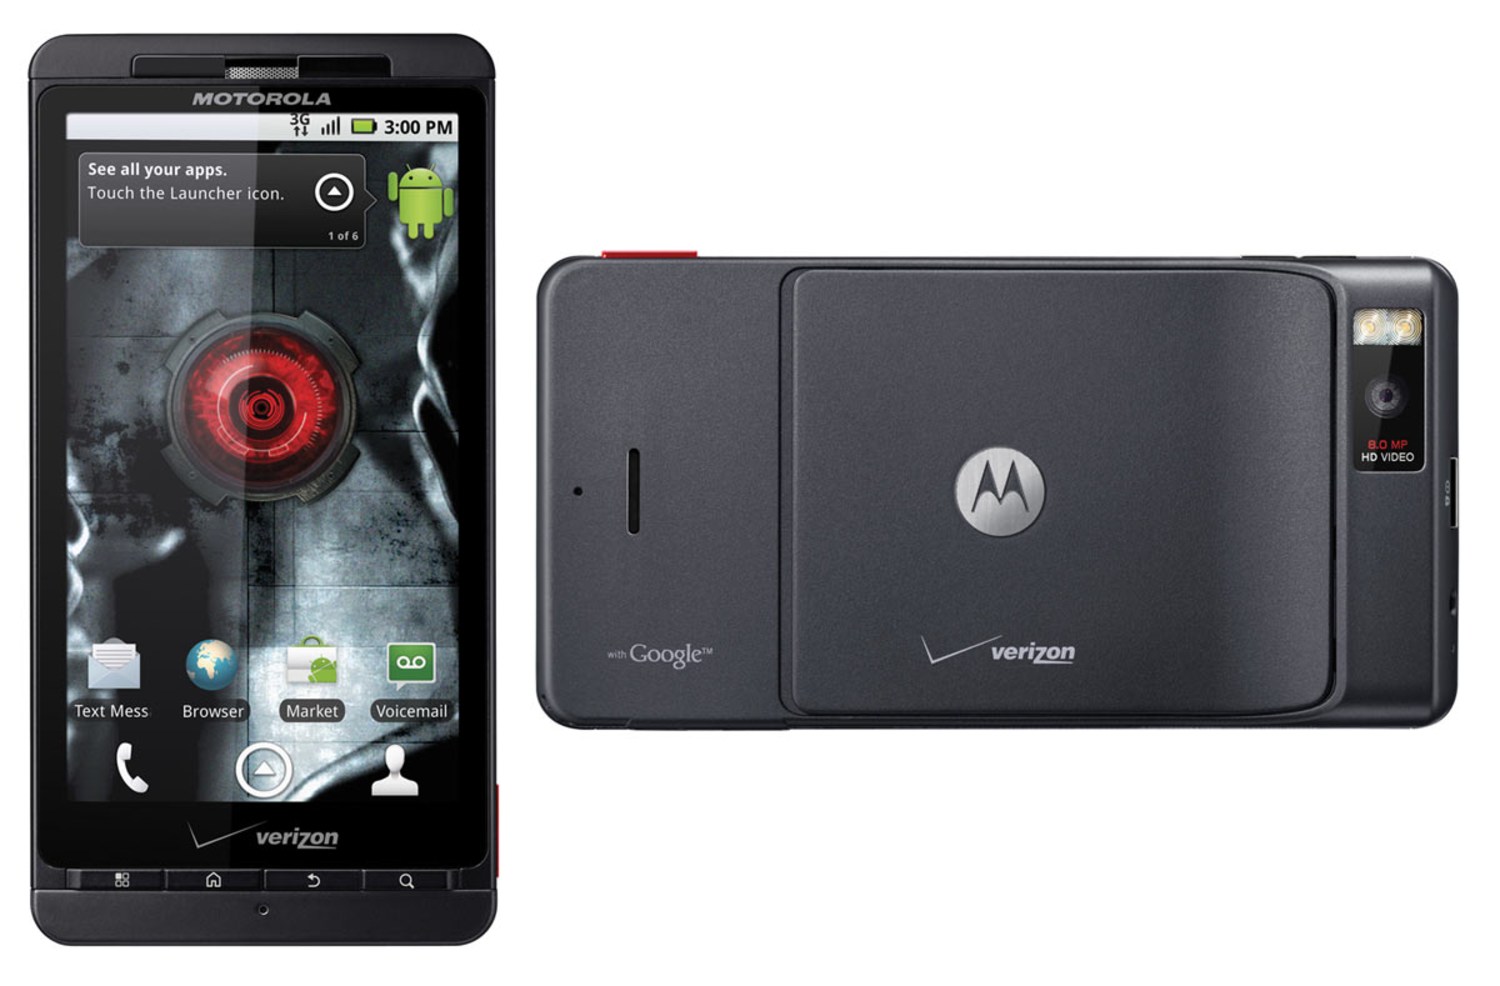 Verizon, Motorola debut giant Droid X phone